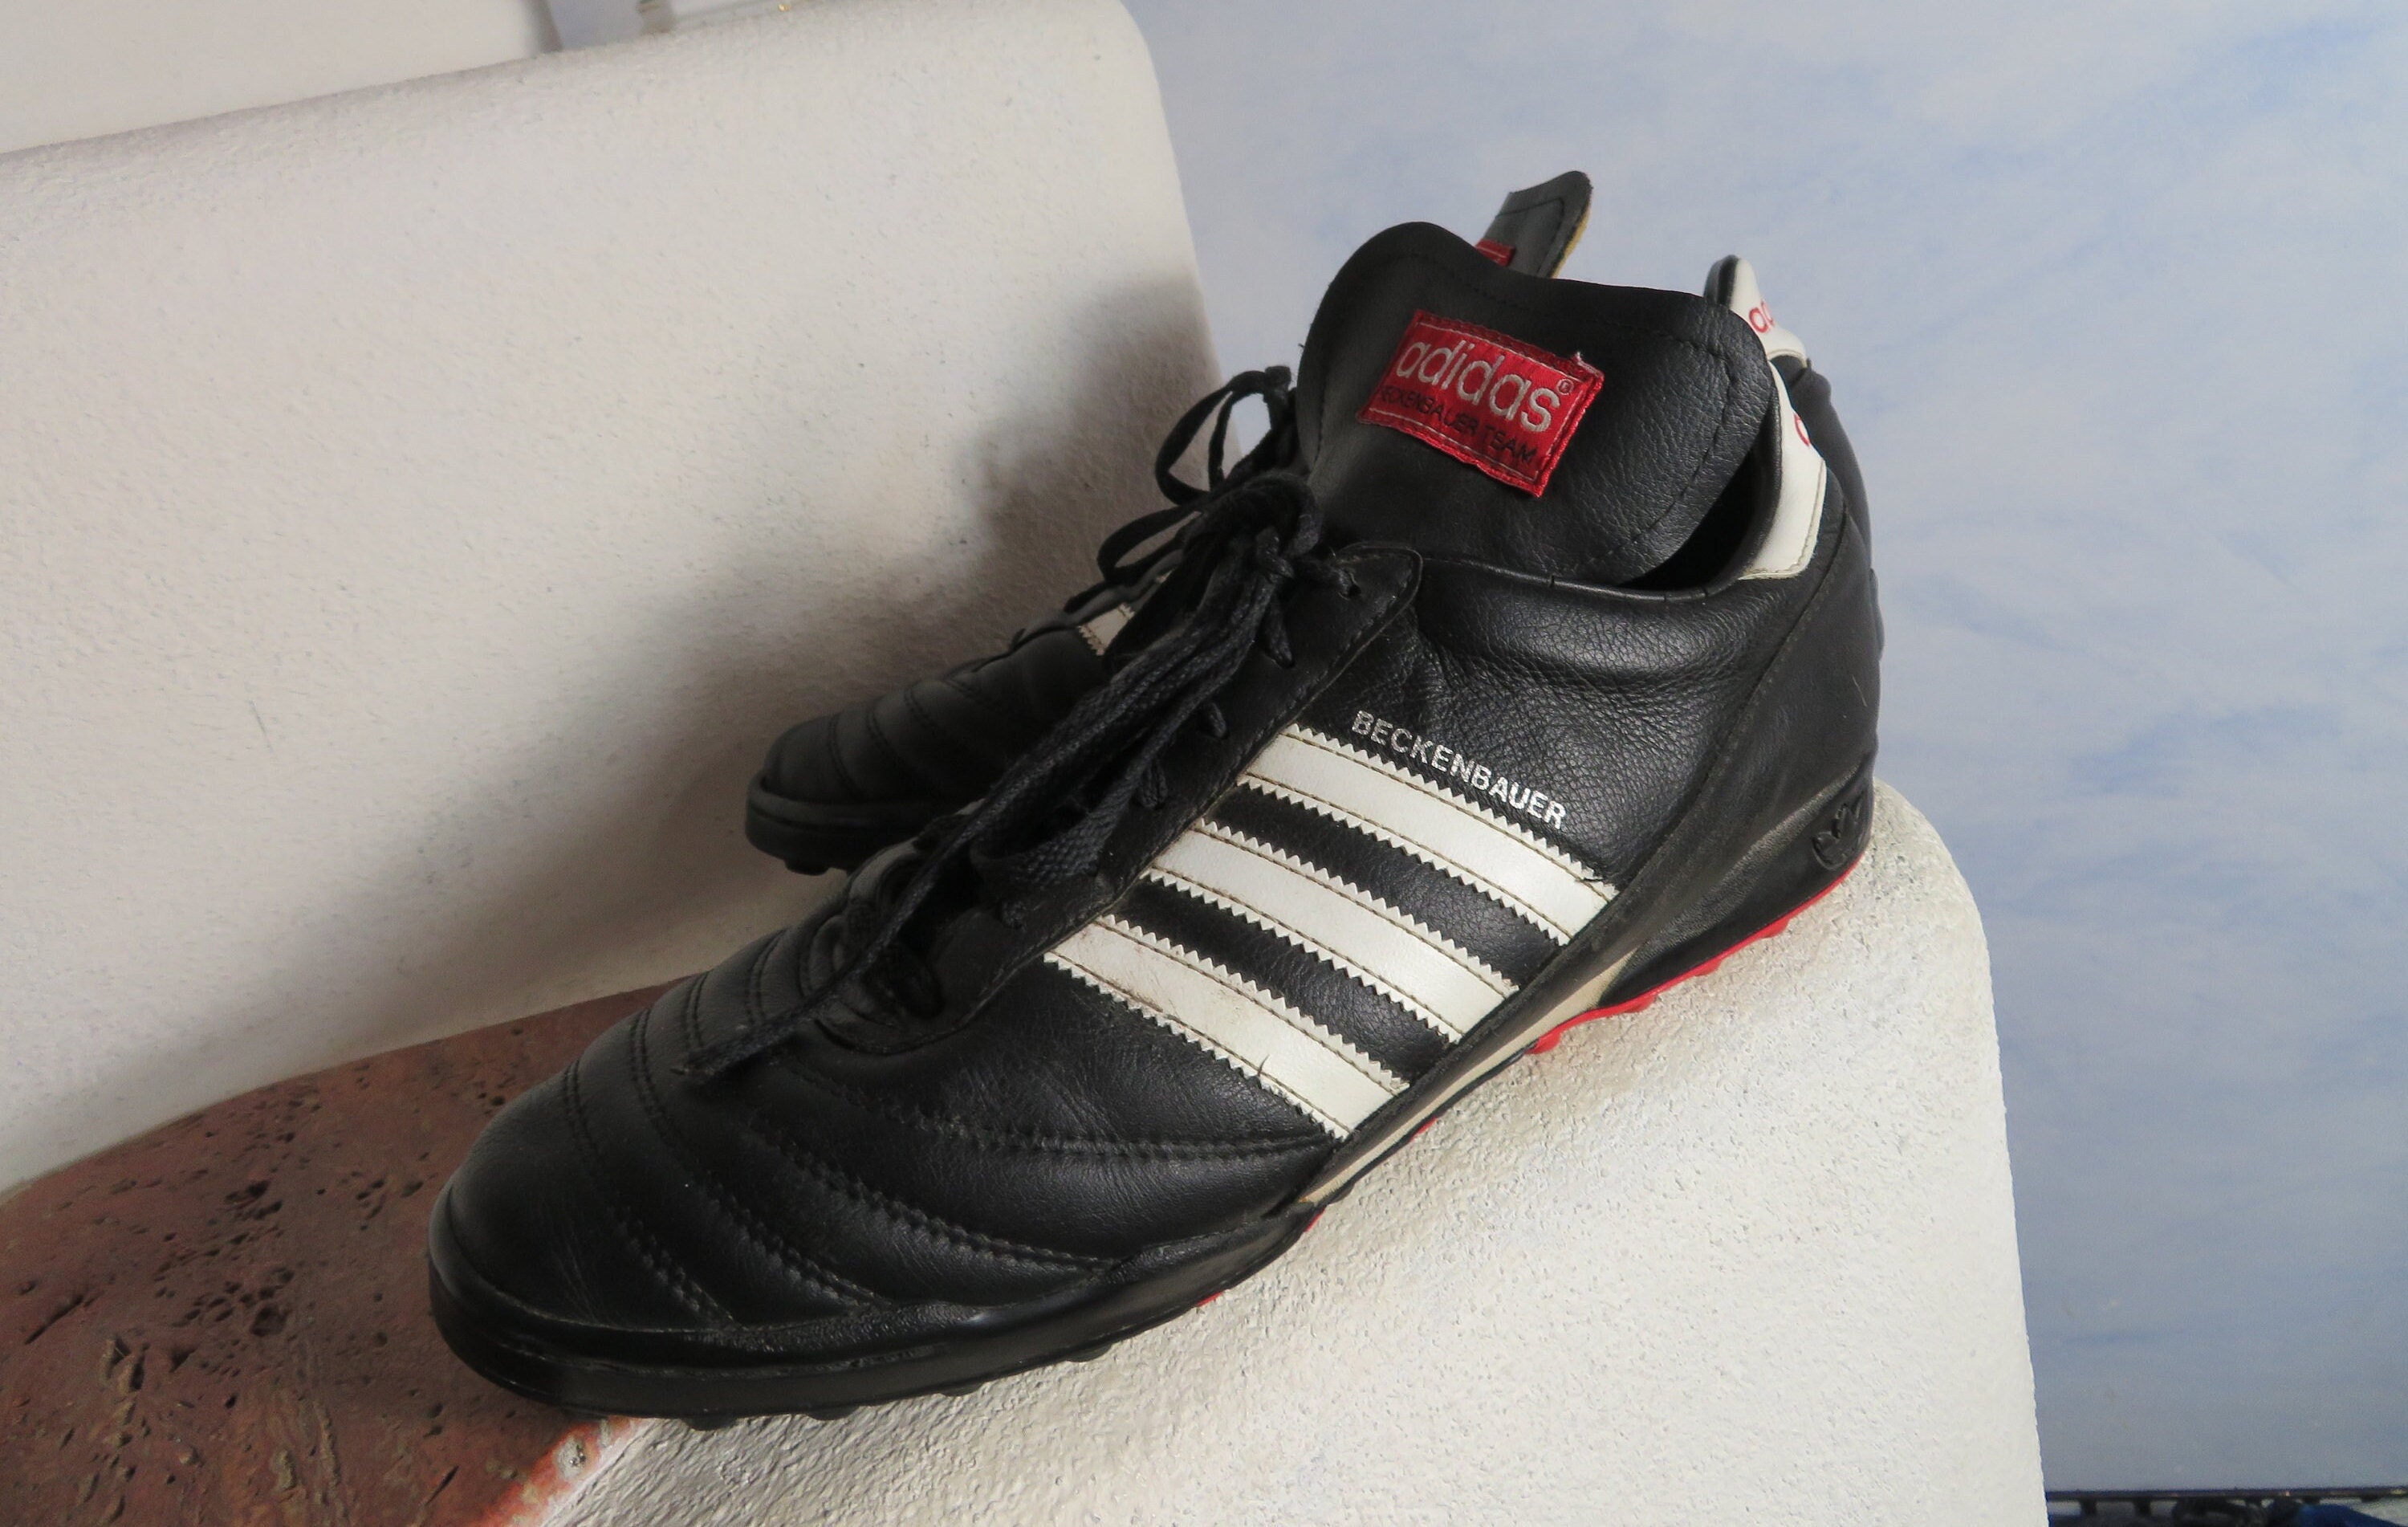 Rare Adidas Accelerator Vintage Predator Football Boots 98s 